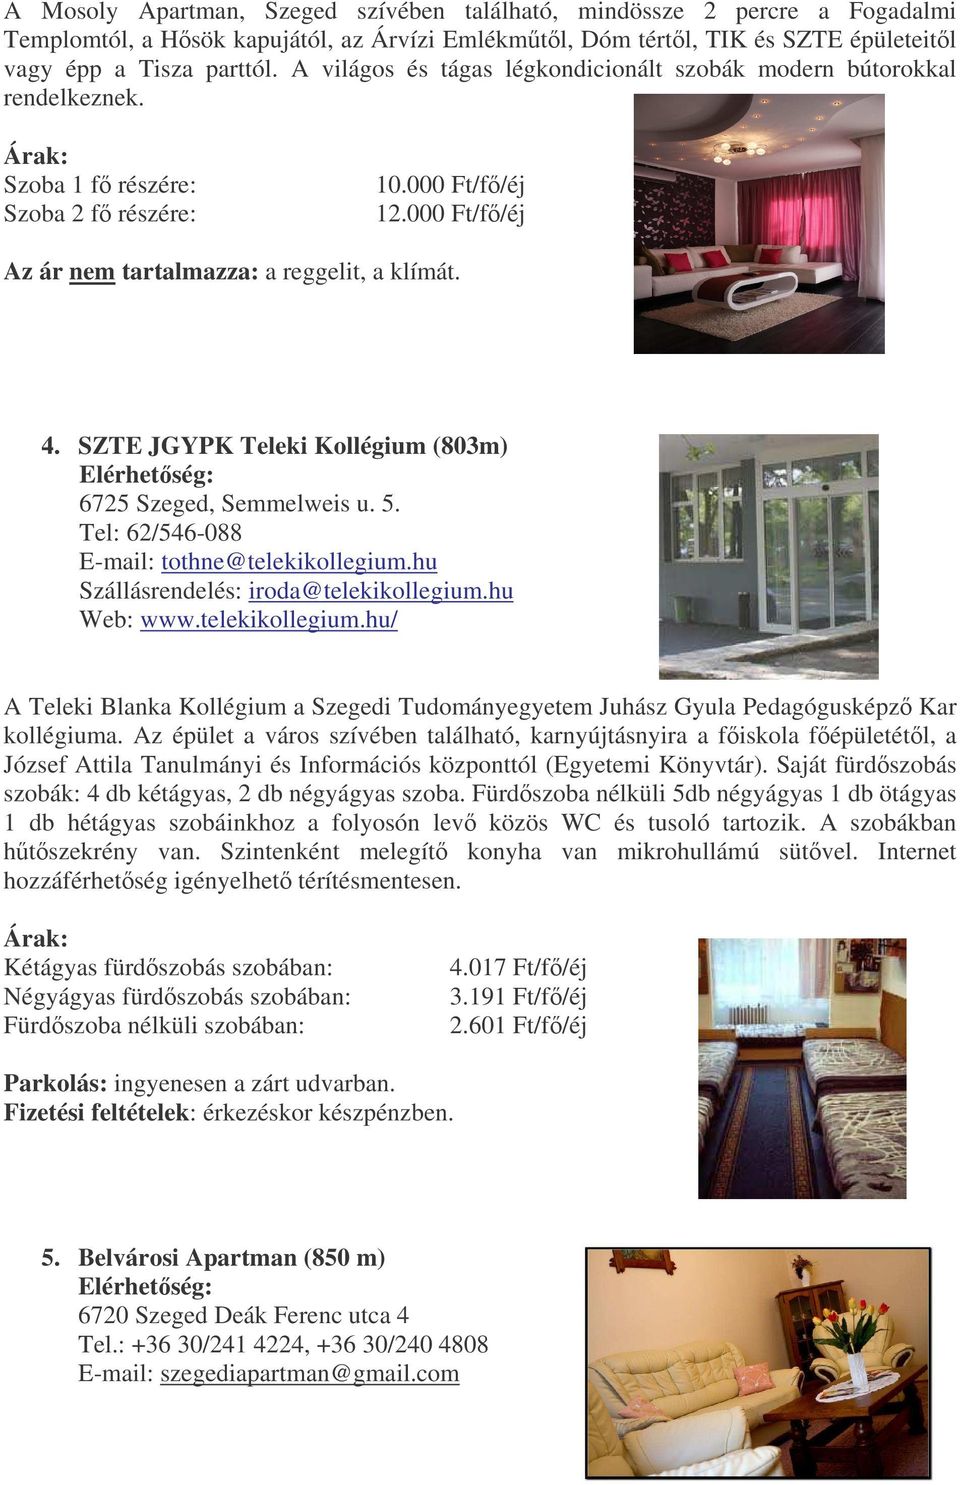 SZTE JGYPK Teleki Kollégium (803m) 6725 Szeged, Semmelweis u. 5. Tel: 62/546-088 E-mail: tothne@telekikollegium.